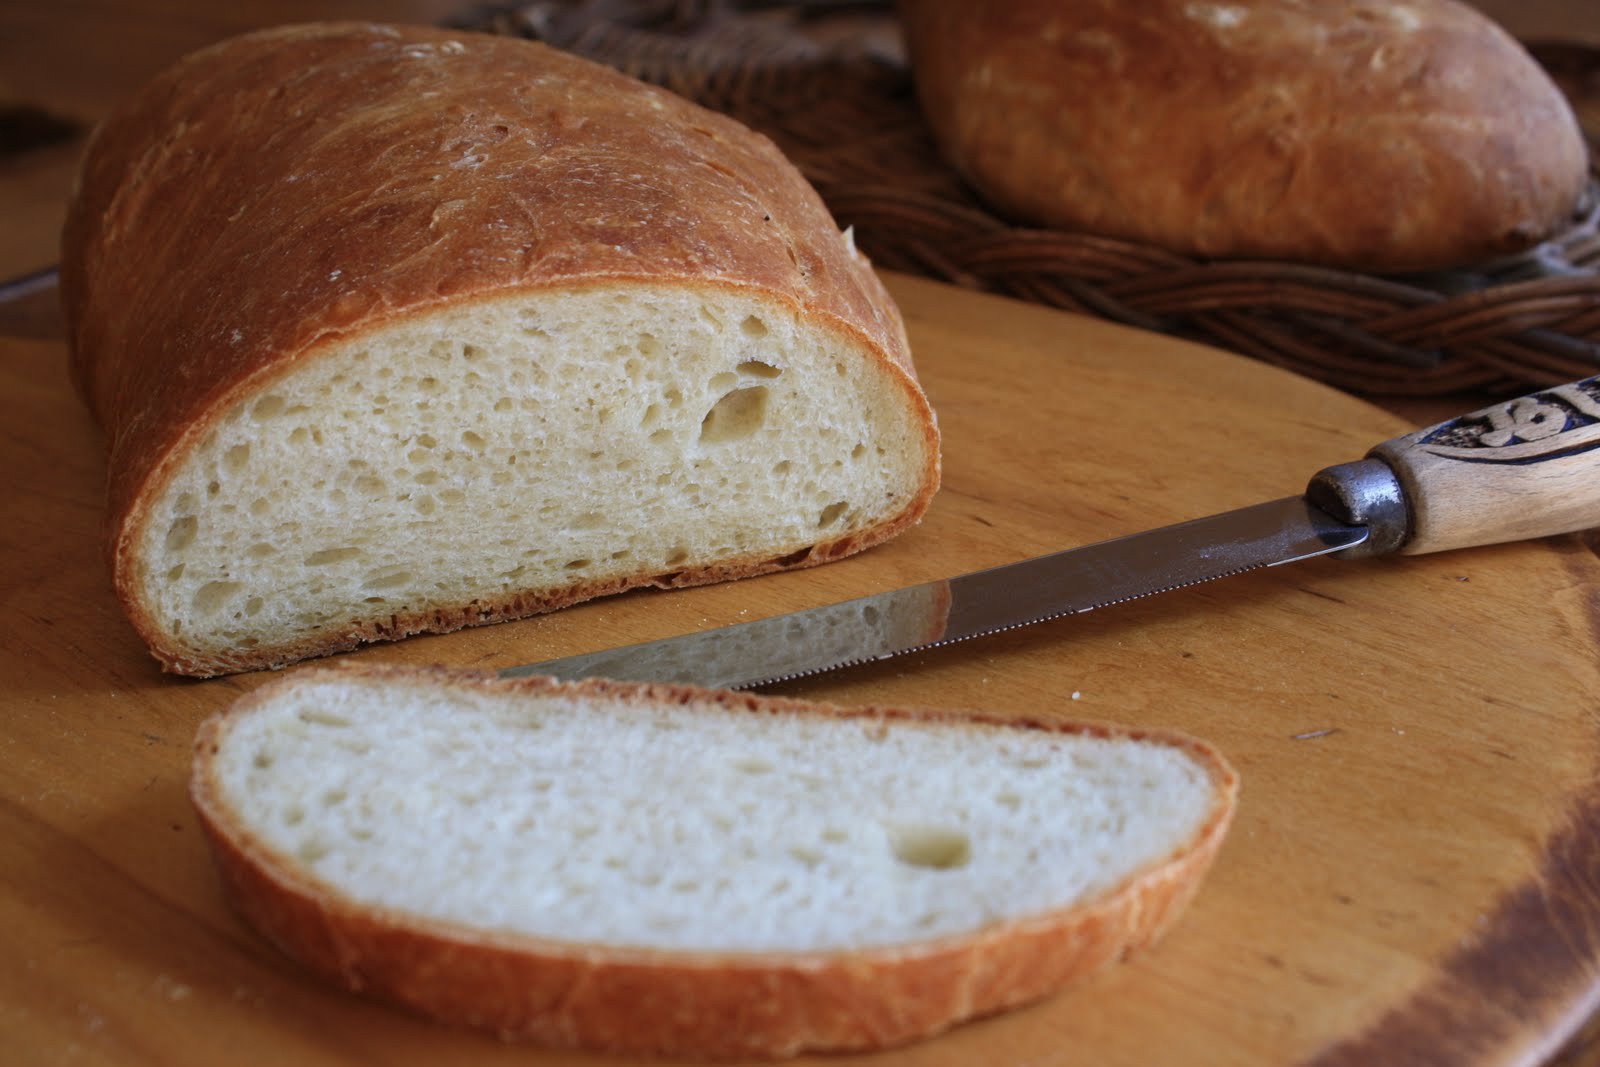 Italian Bread Nutrition
 Italian Bread Facts and Nutritional Value